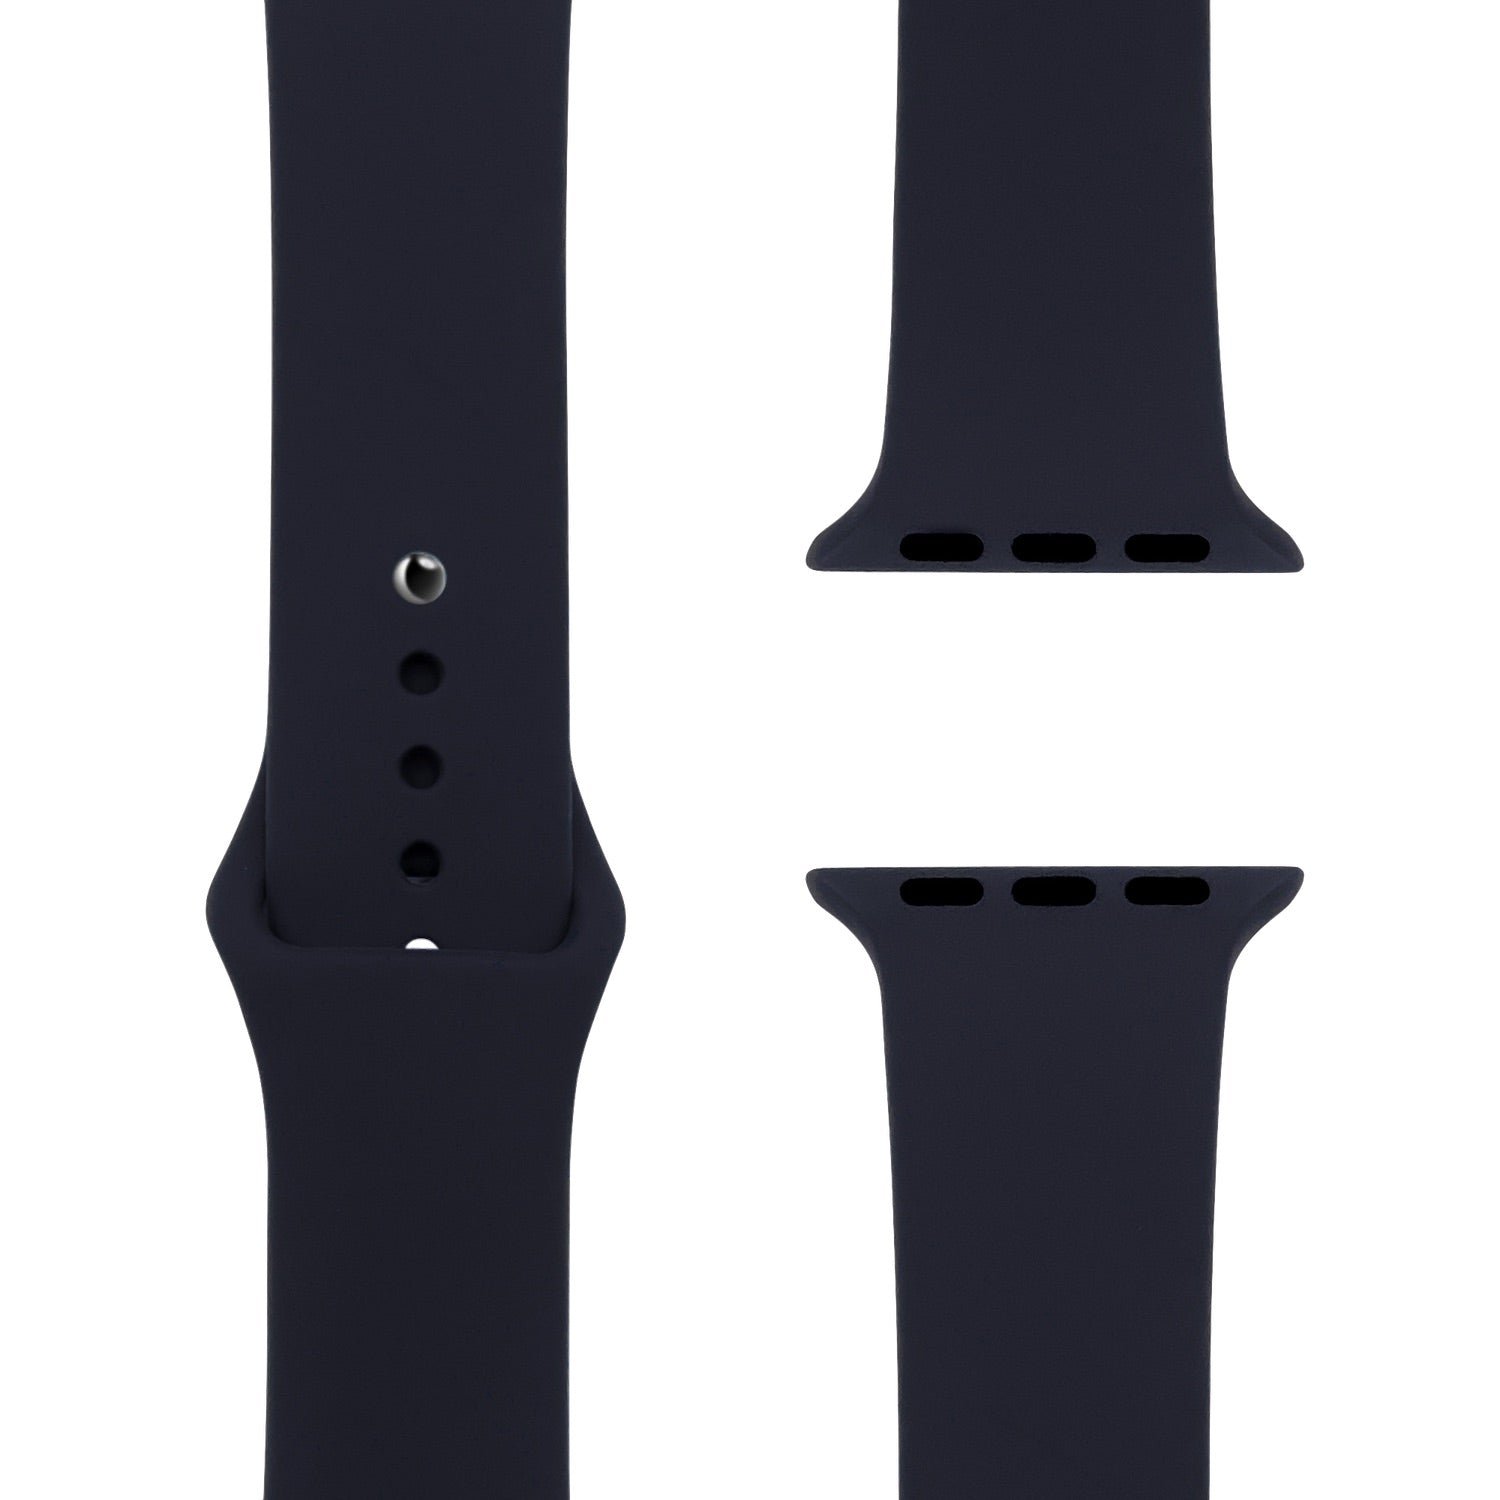 Midnight Silikon Loop | Sportarmband für Apple Watch (Blau)-Apple Watch Armbänder kaufen